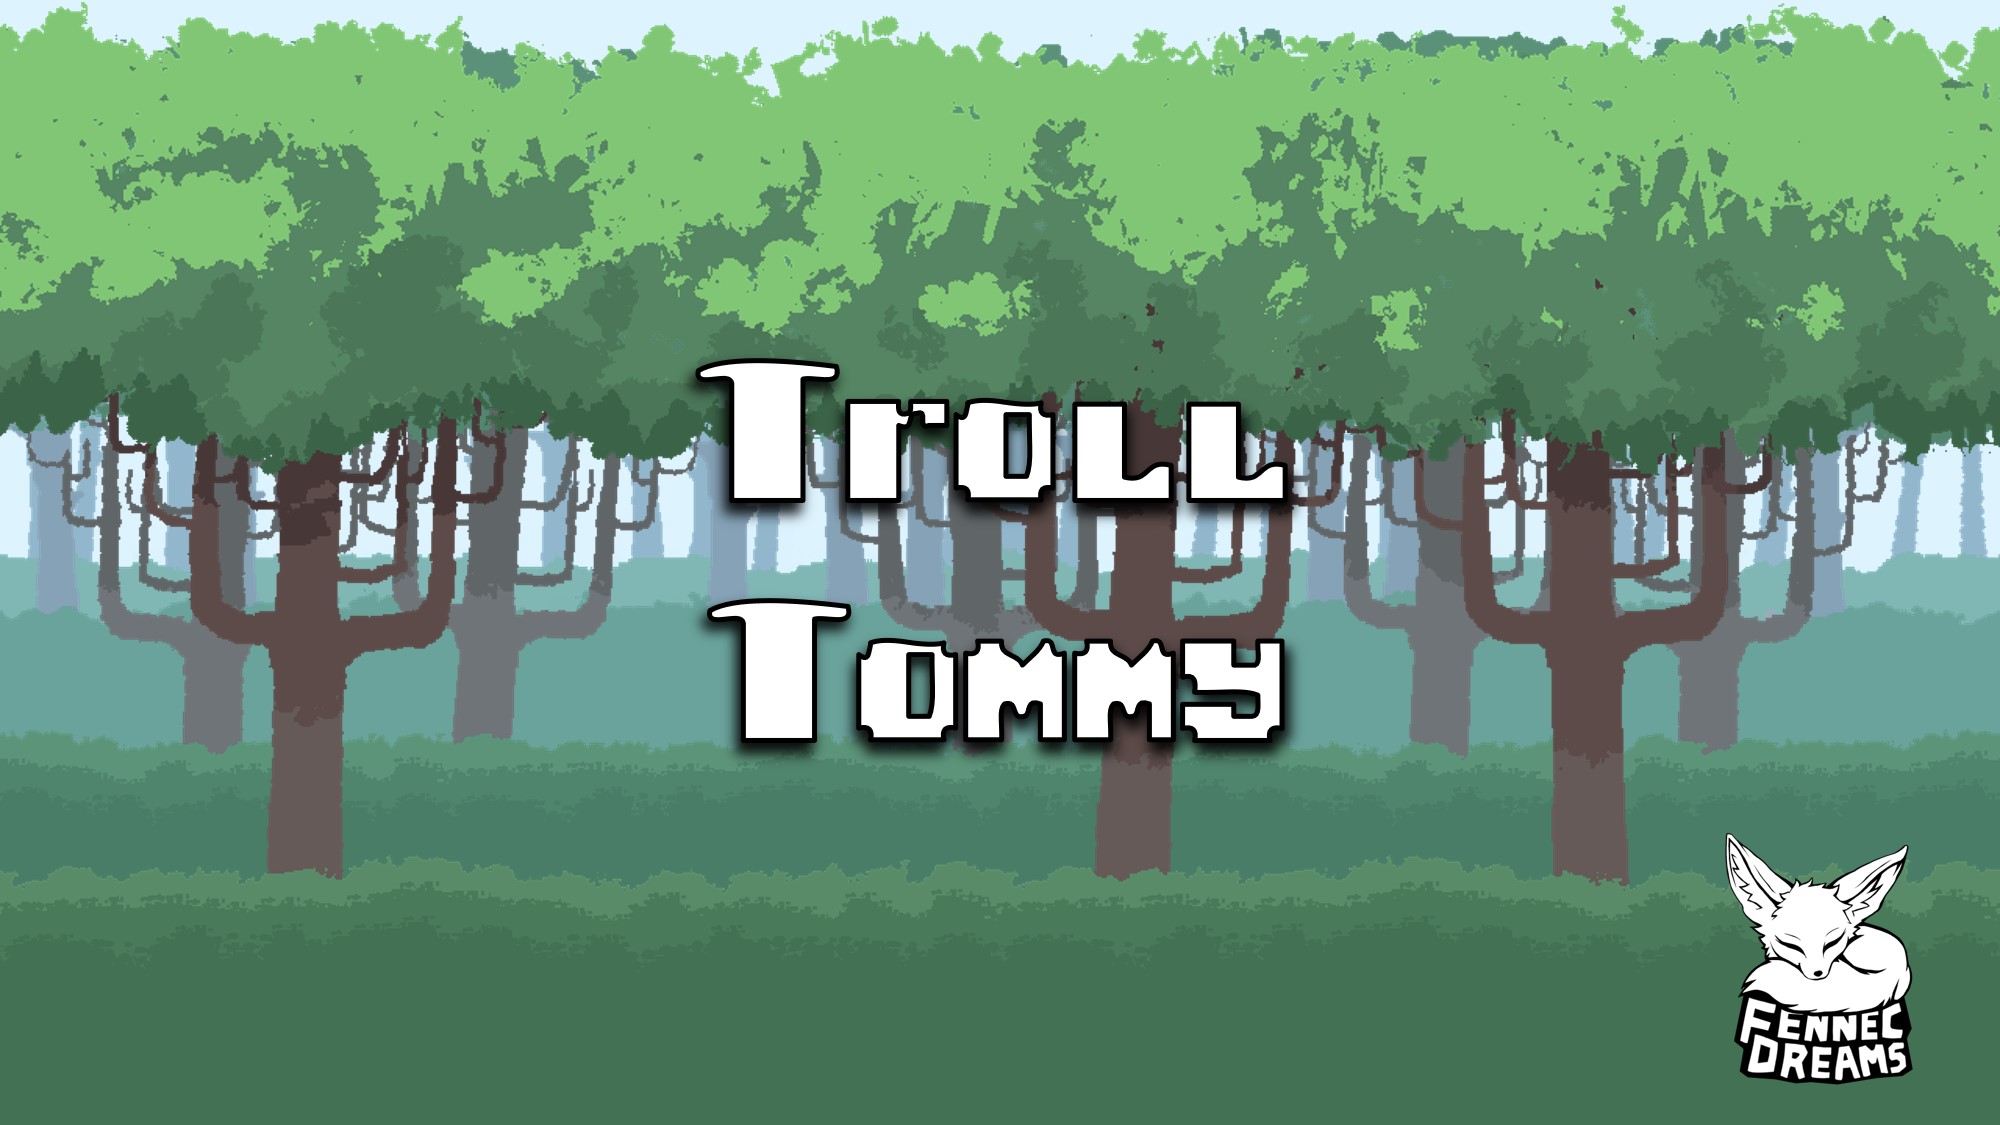 Troll Tommy